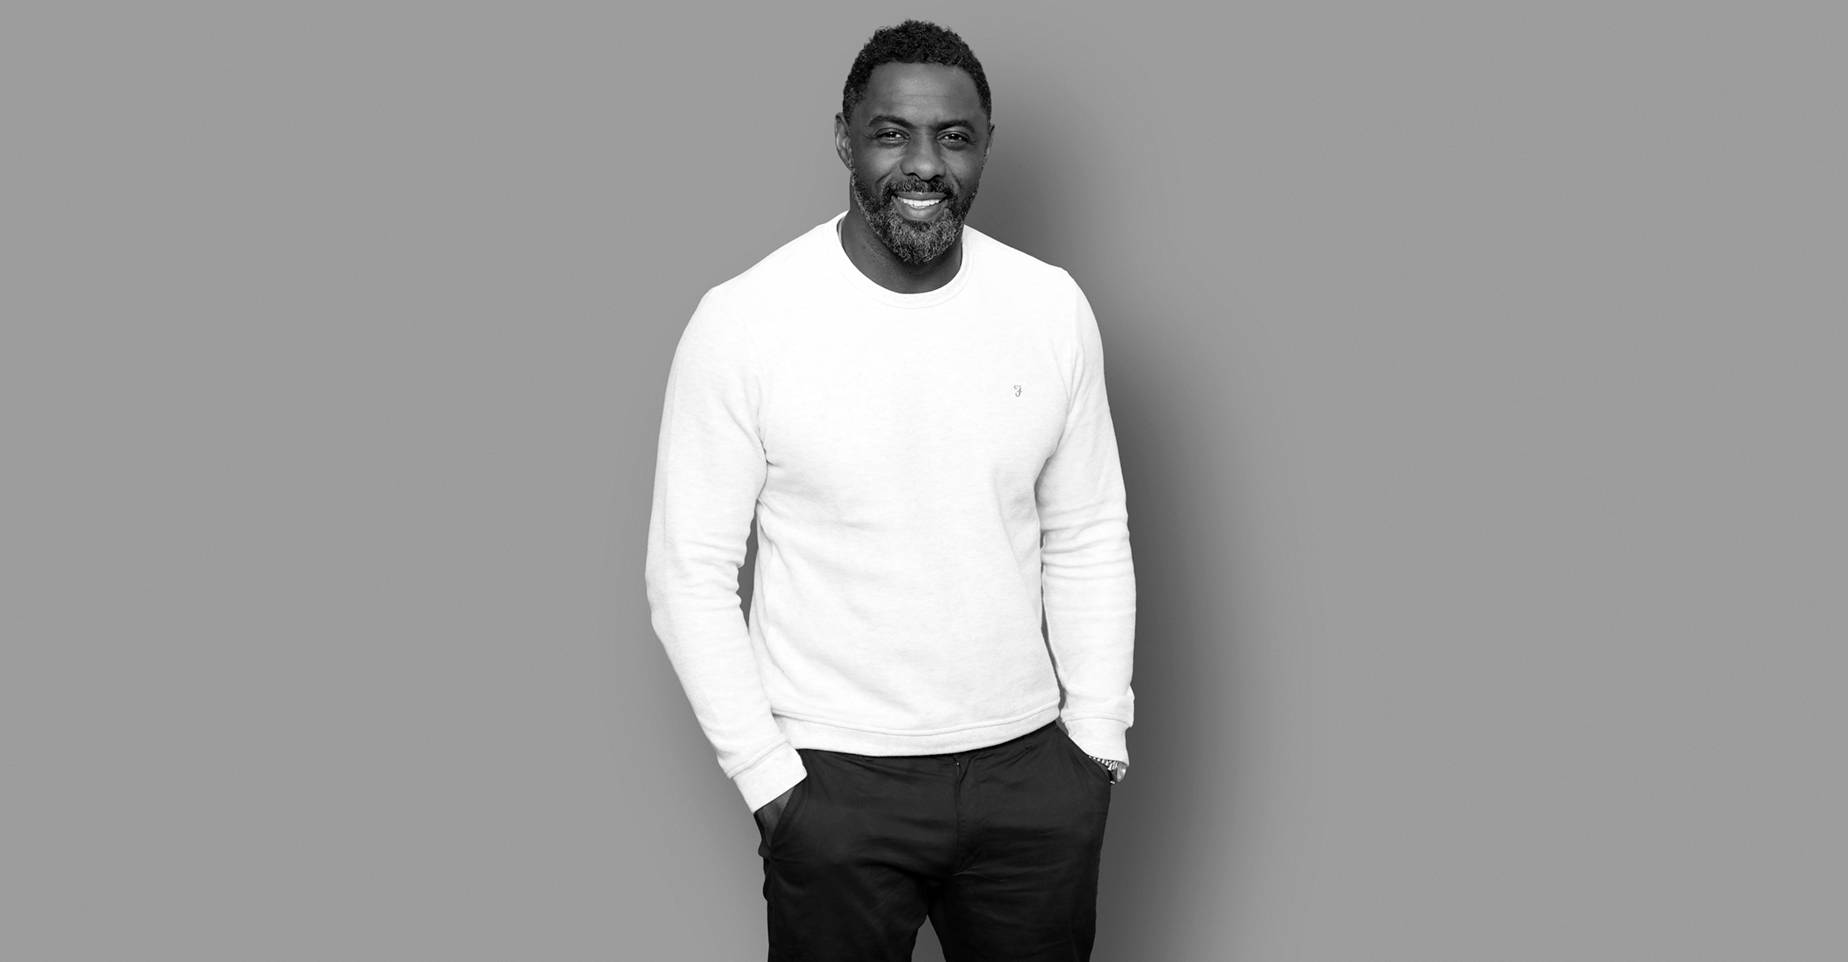 Idris Elba Medium-shot Body Picture Wallpaper